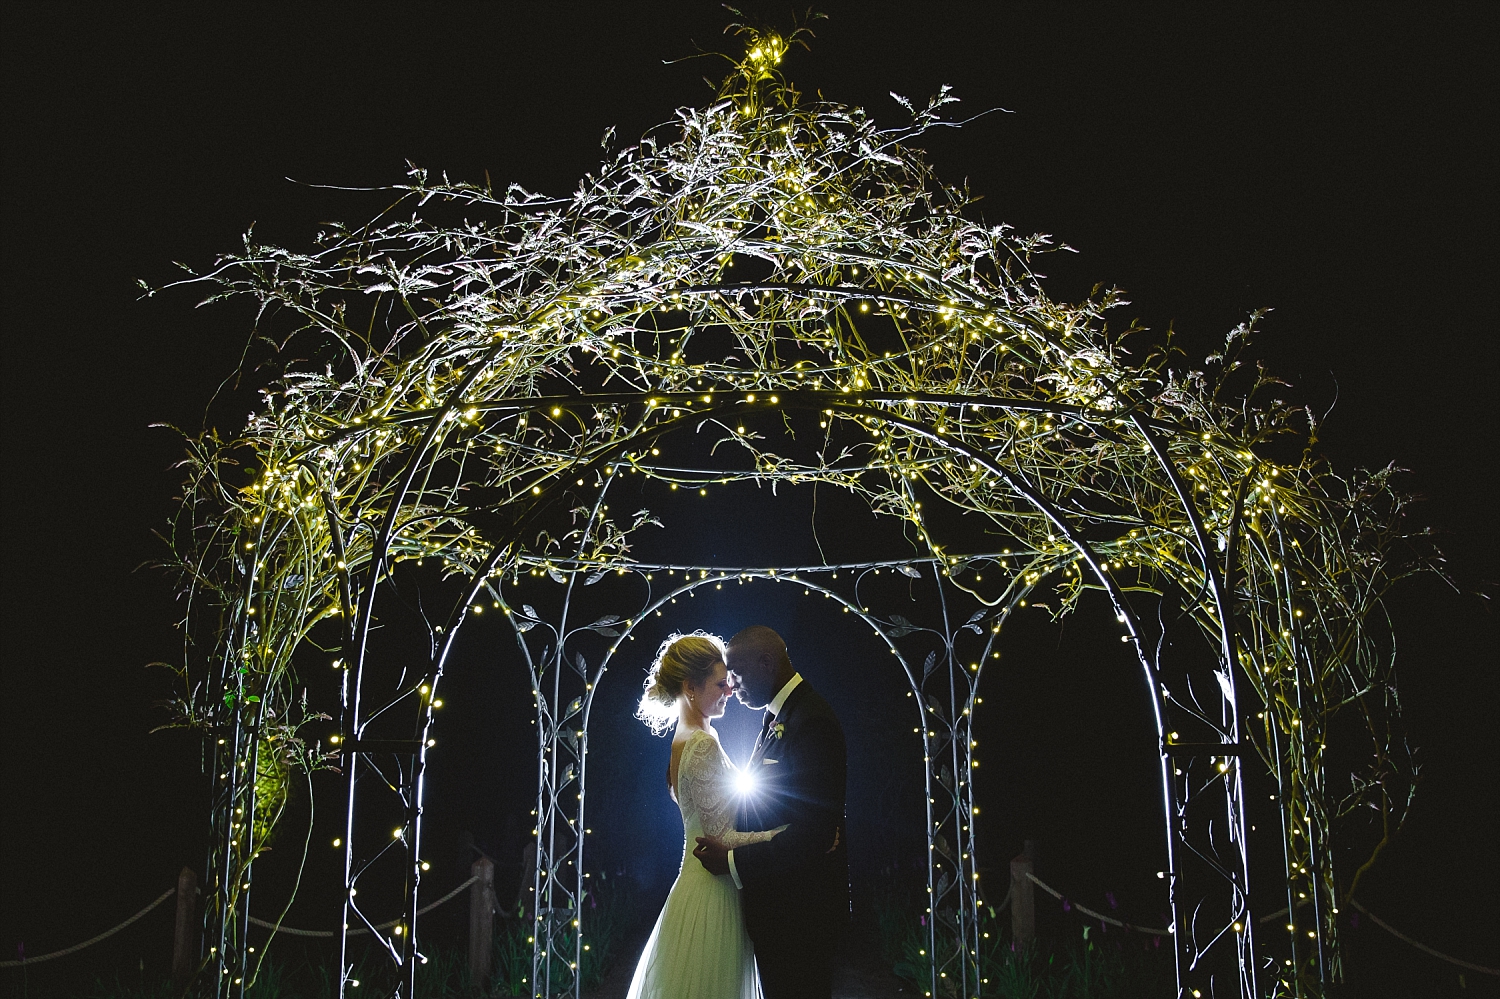 Gaynes Park Wedding Photographer - Portrait in the Gardens at Night